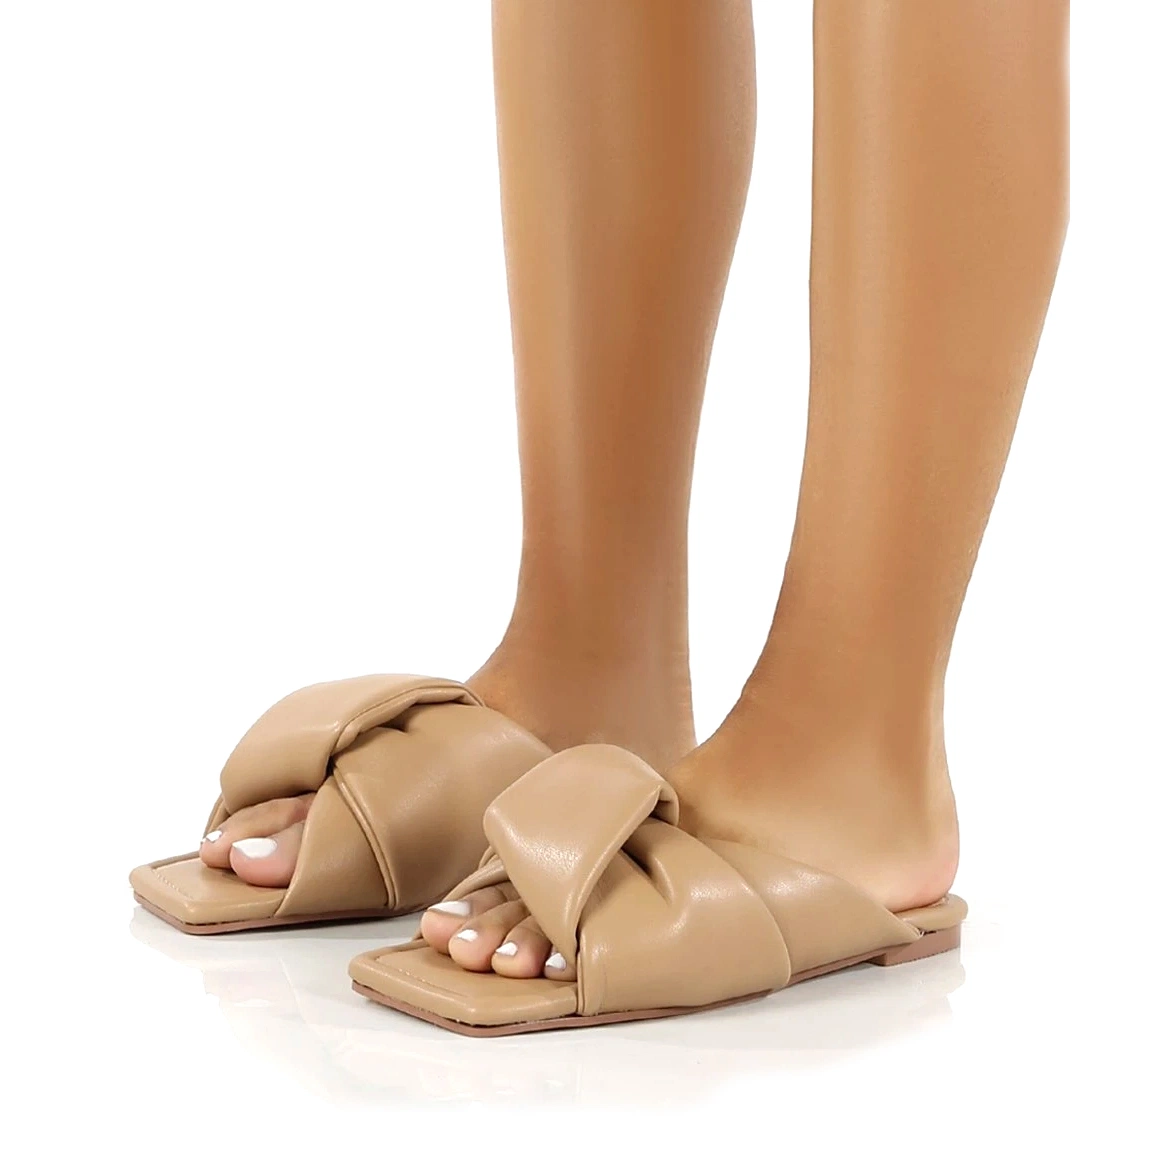 Wholesale/Supplier Lowest Price PU Shoe Square Toe Flats Bow Design Women Slipper Shoe